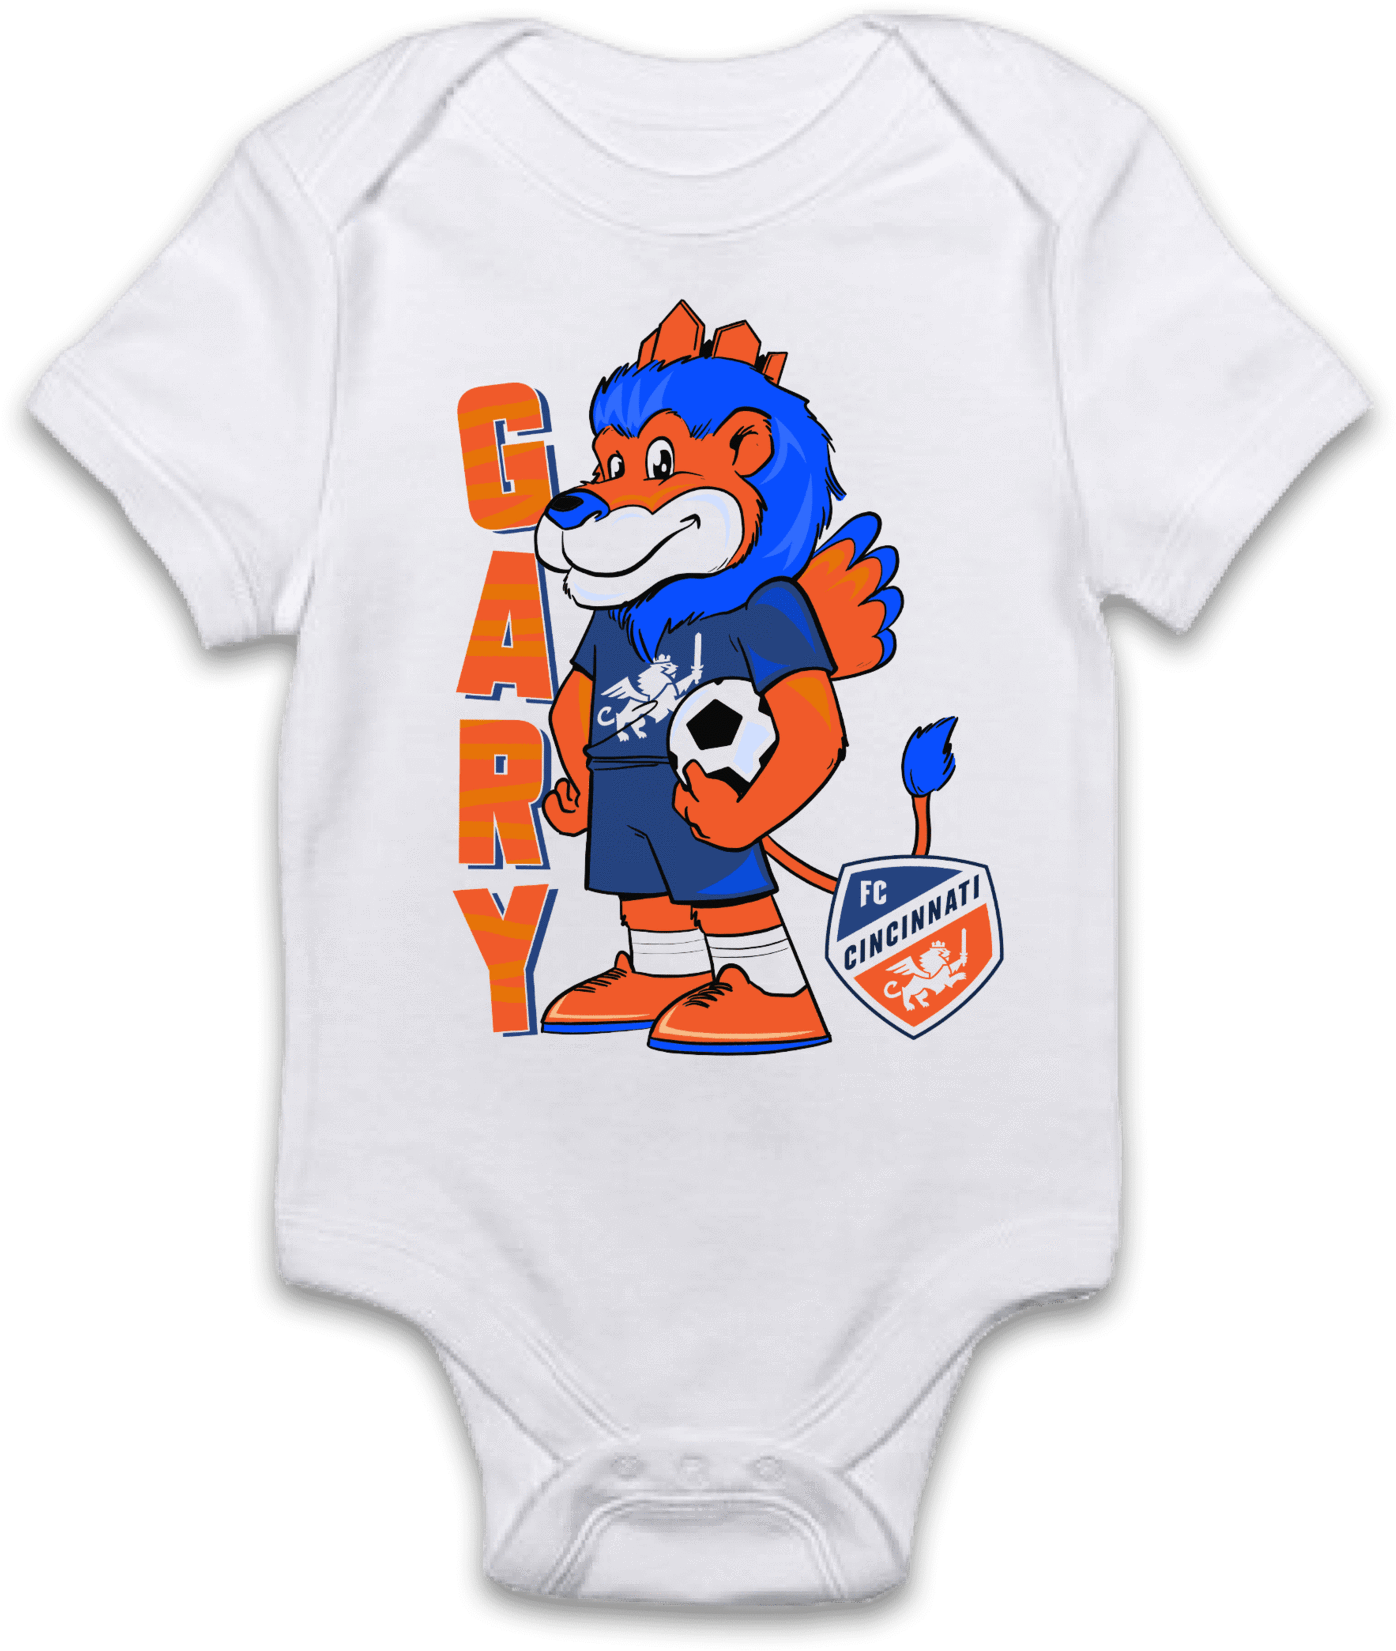 Cincinnati Soccer Mascot Baby Onesie PNG image